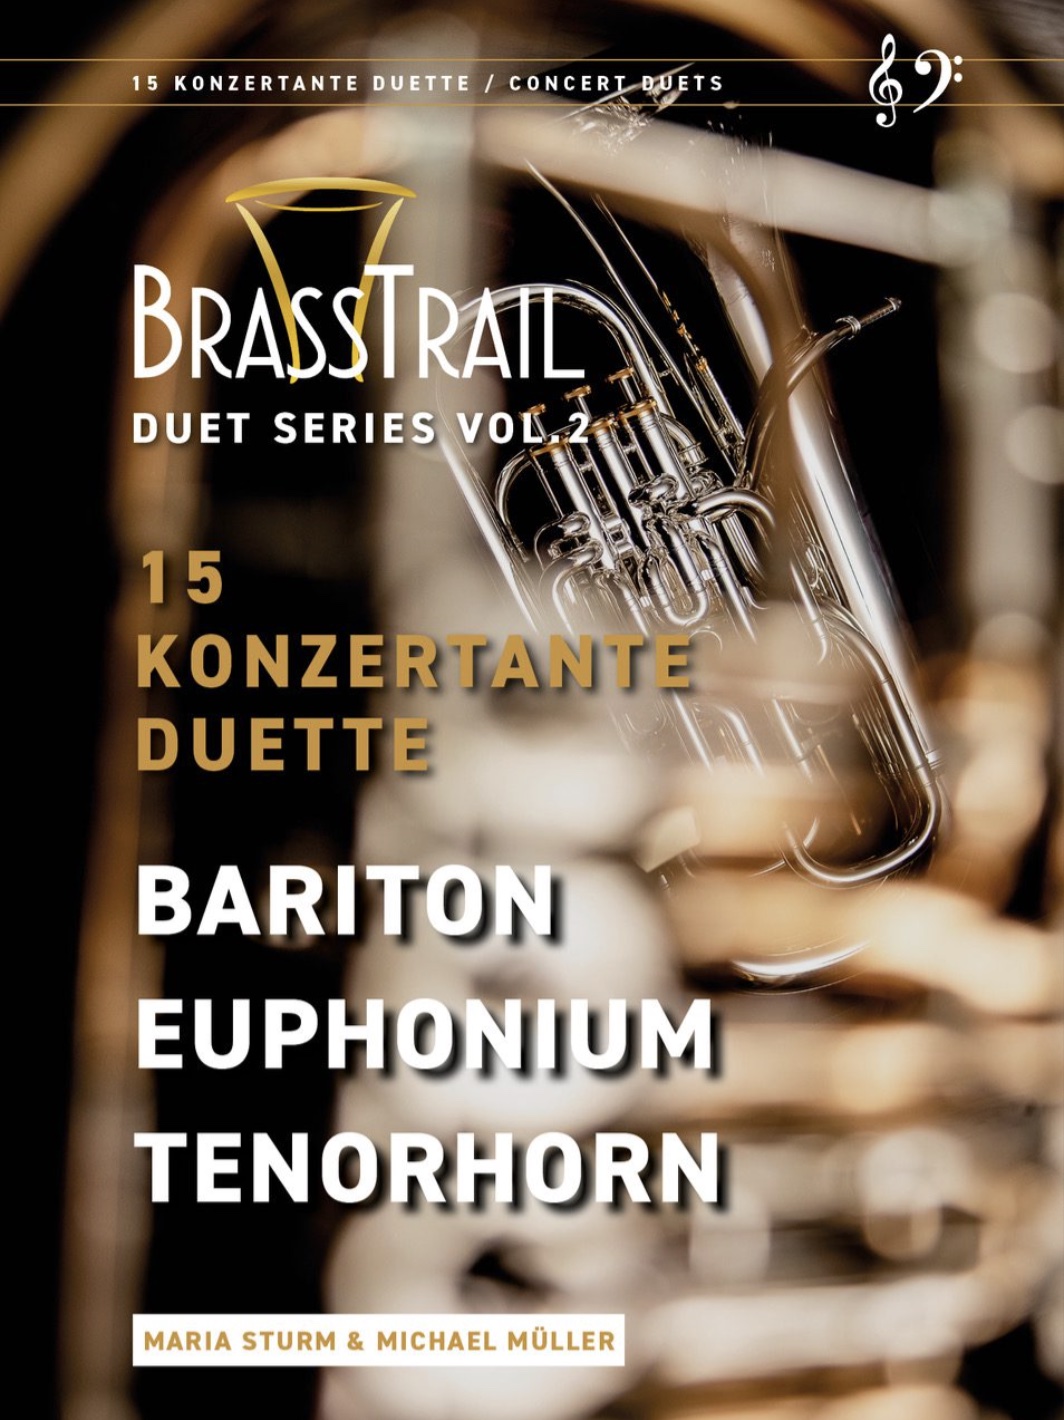 BrassTrail Duets series Vol.2 - 15 Concert Duets - Maria Sturm and Michael Muller - TREBLE CLEF